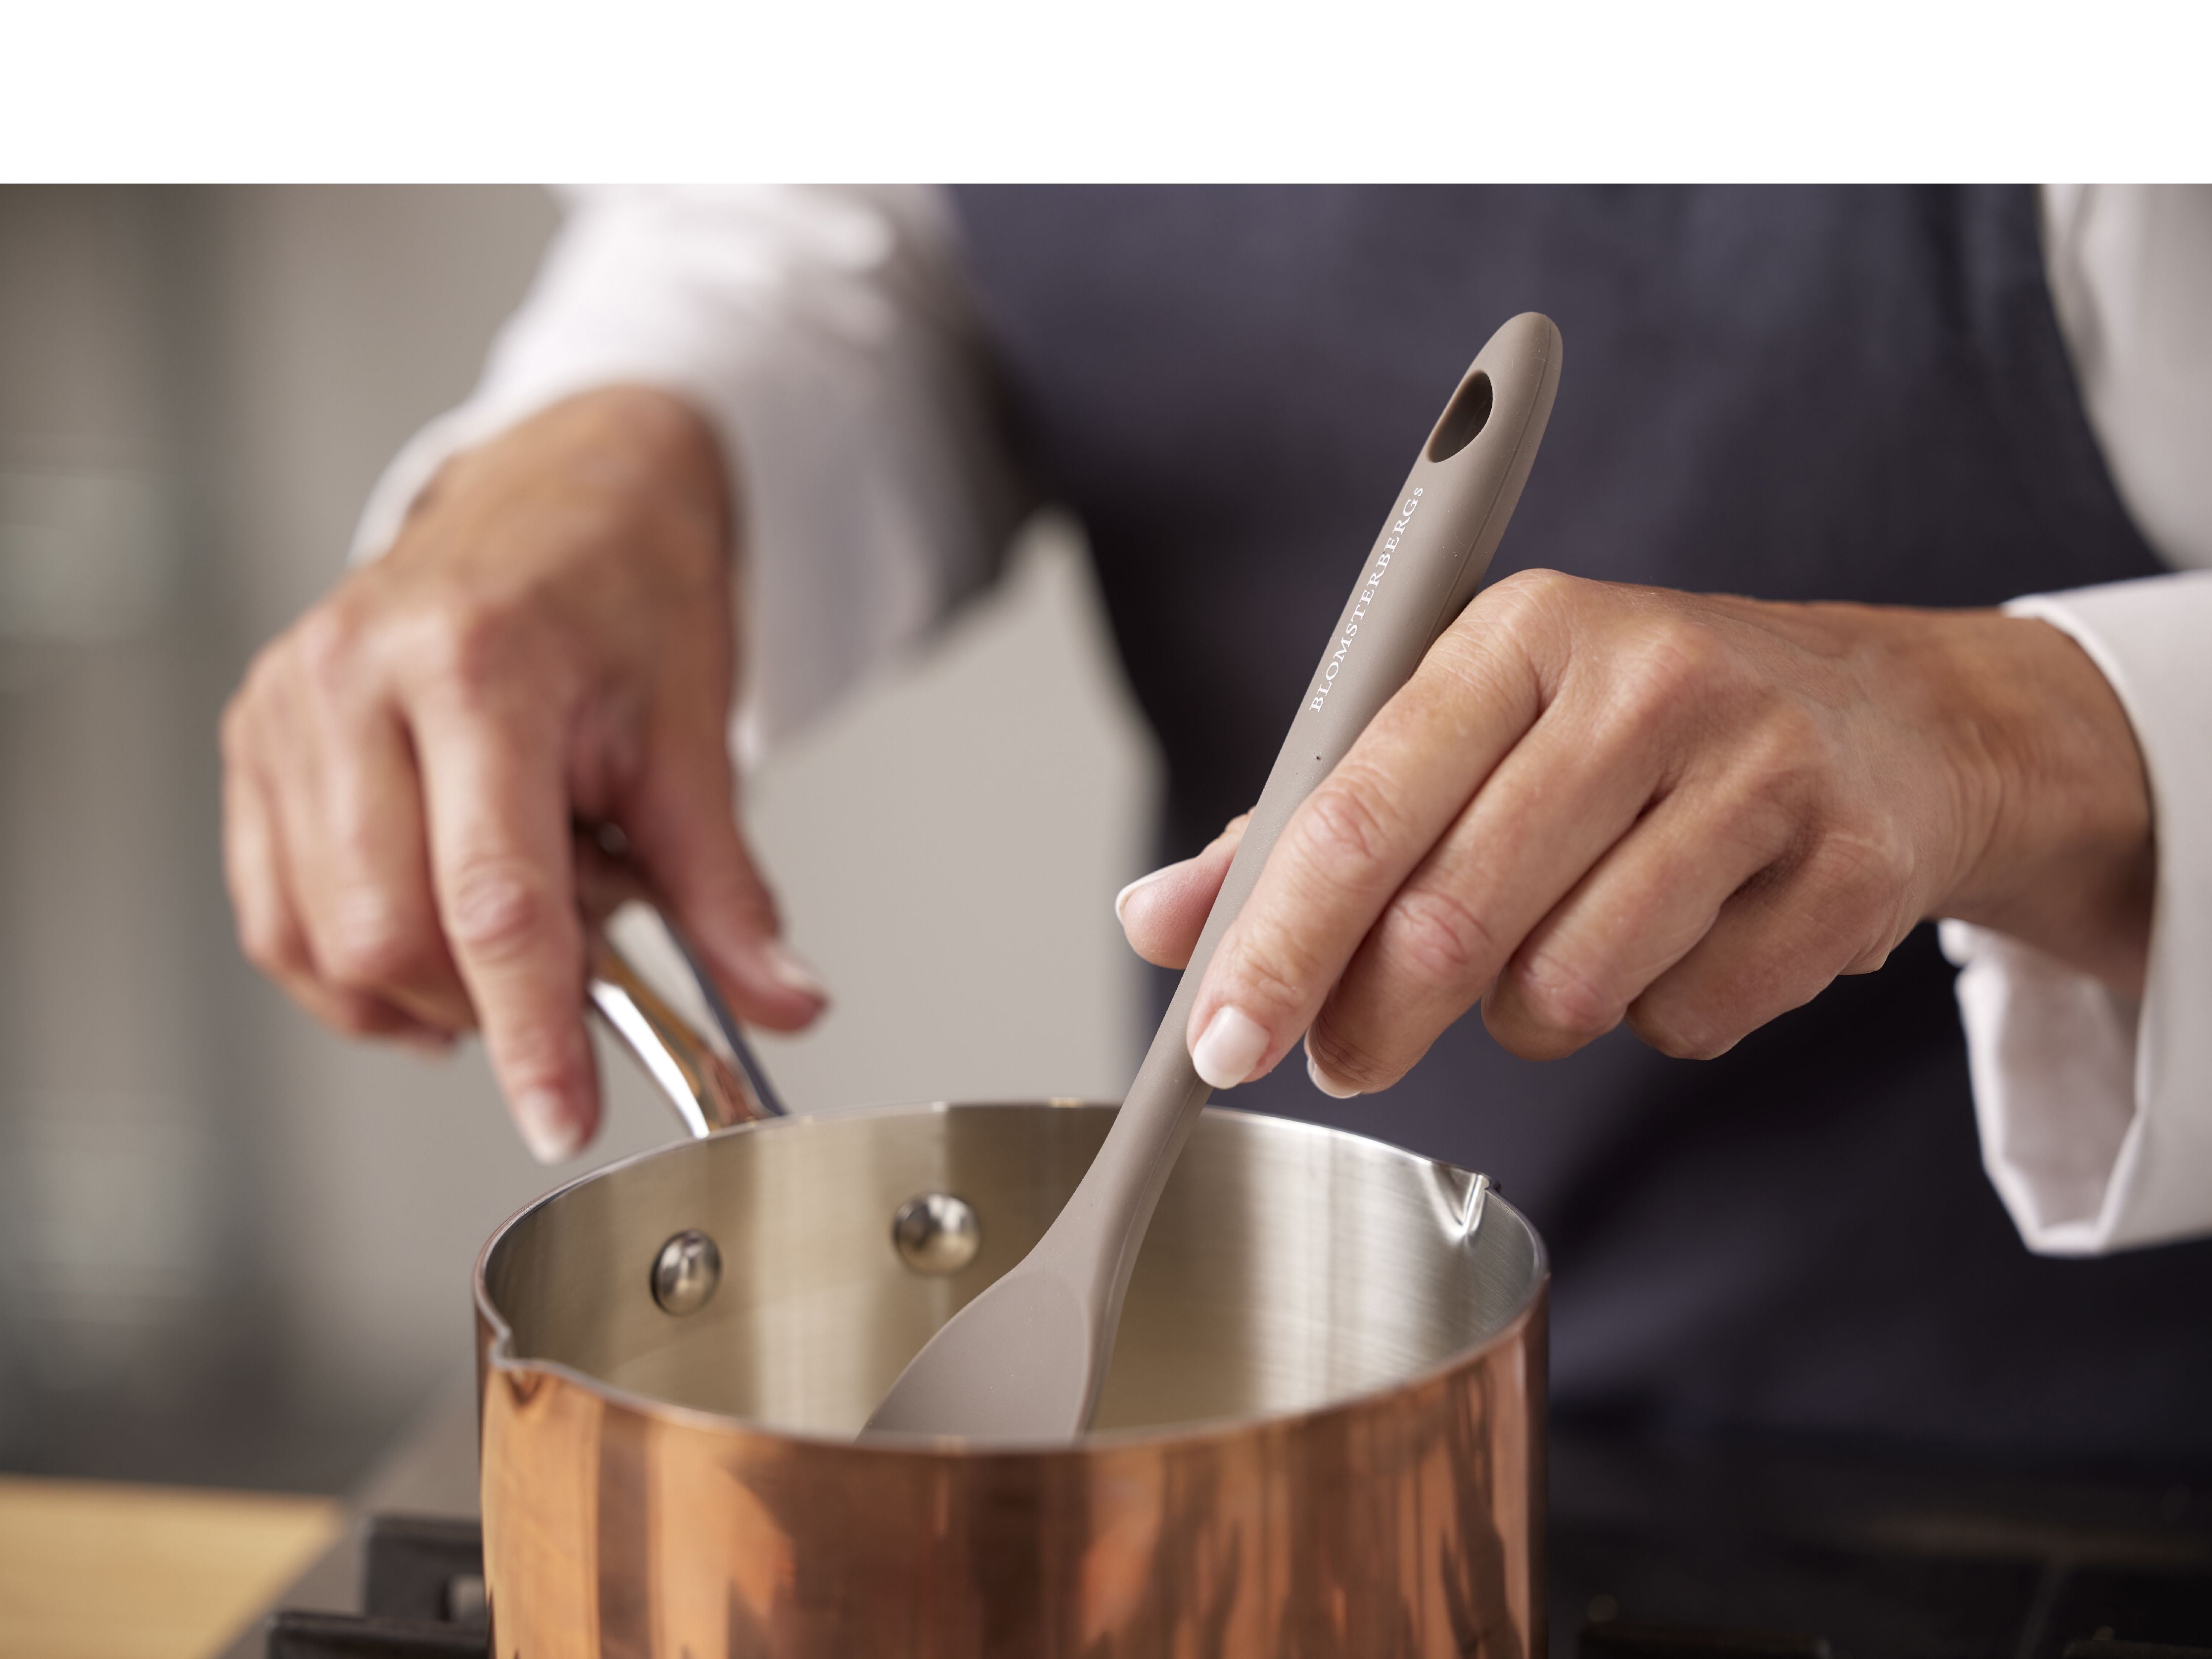 Blomsterberg's Cooking Spoon Latte, 27 cm